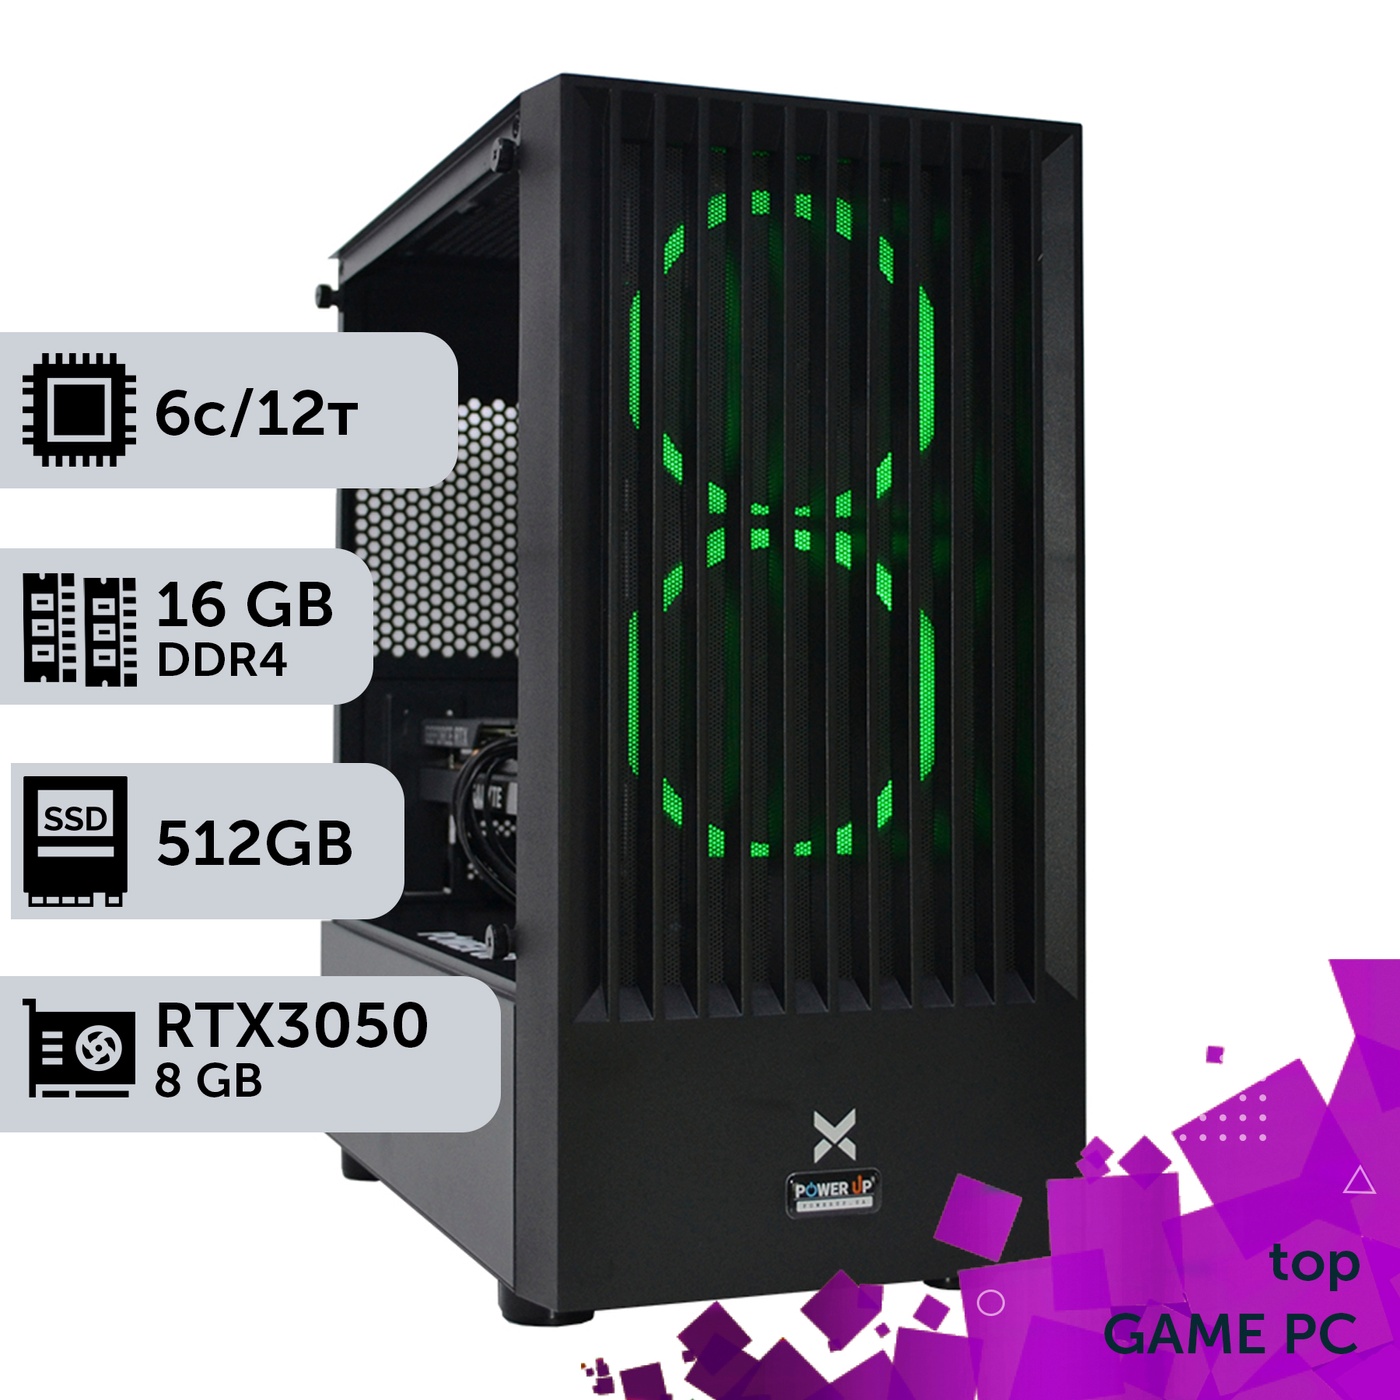 Игровой компьютер GamePC TOP #147 Core i5 10400F/16 GB/SSD 512GB/GeForce RTX 3050 8GB